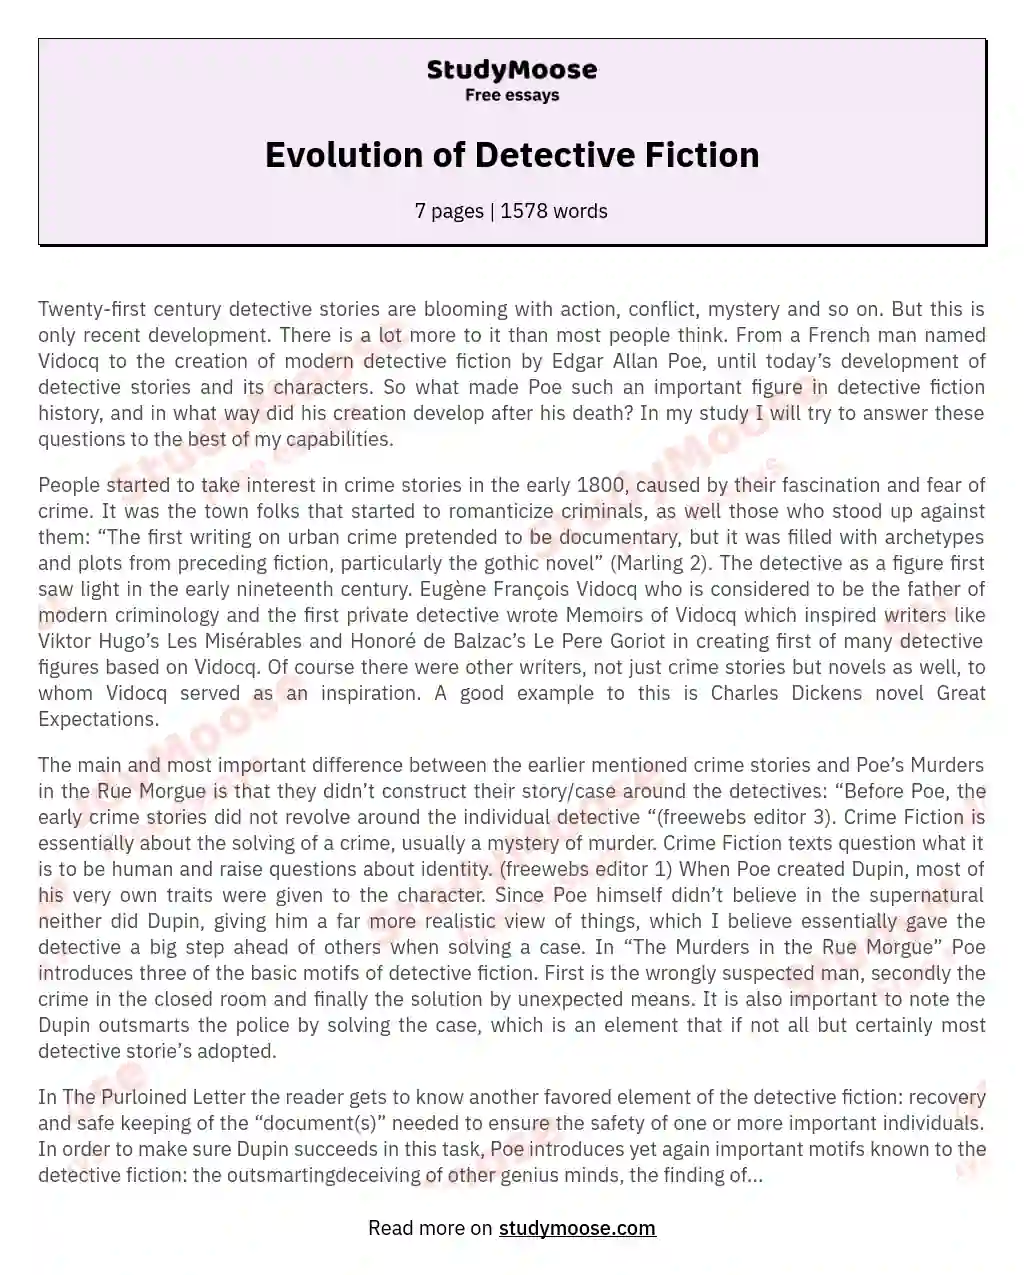 Evolution of Detective Fiction essay